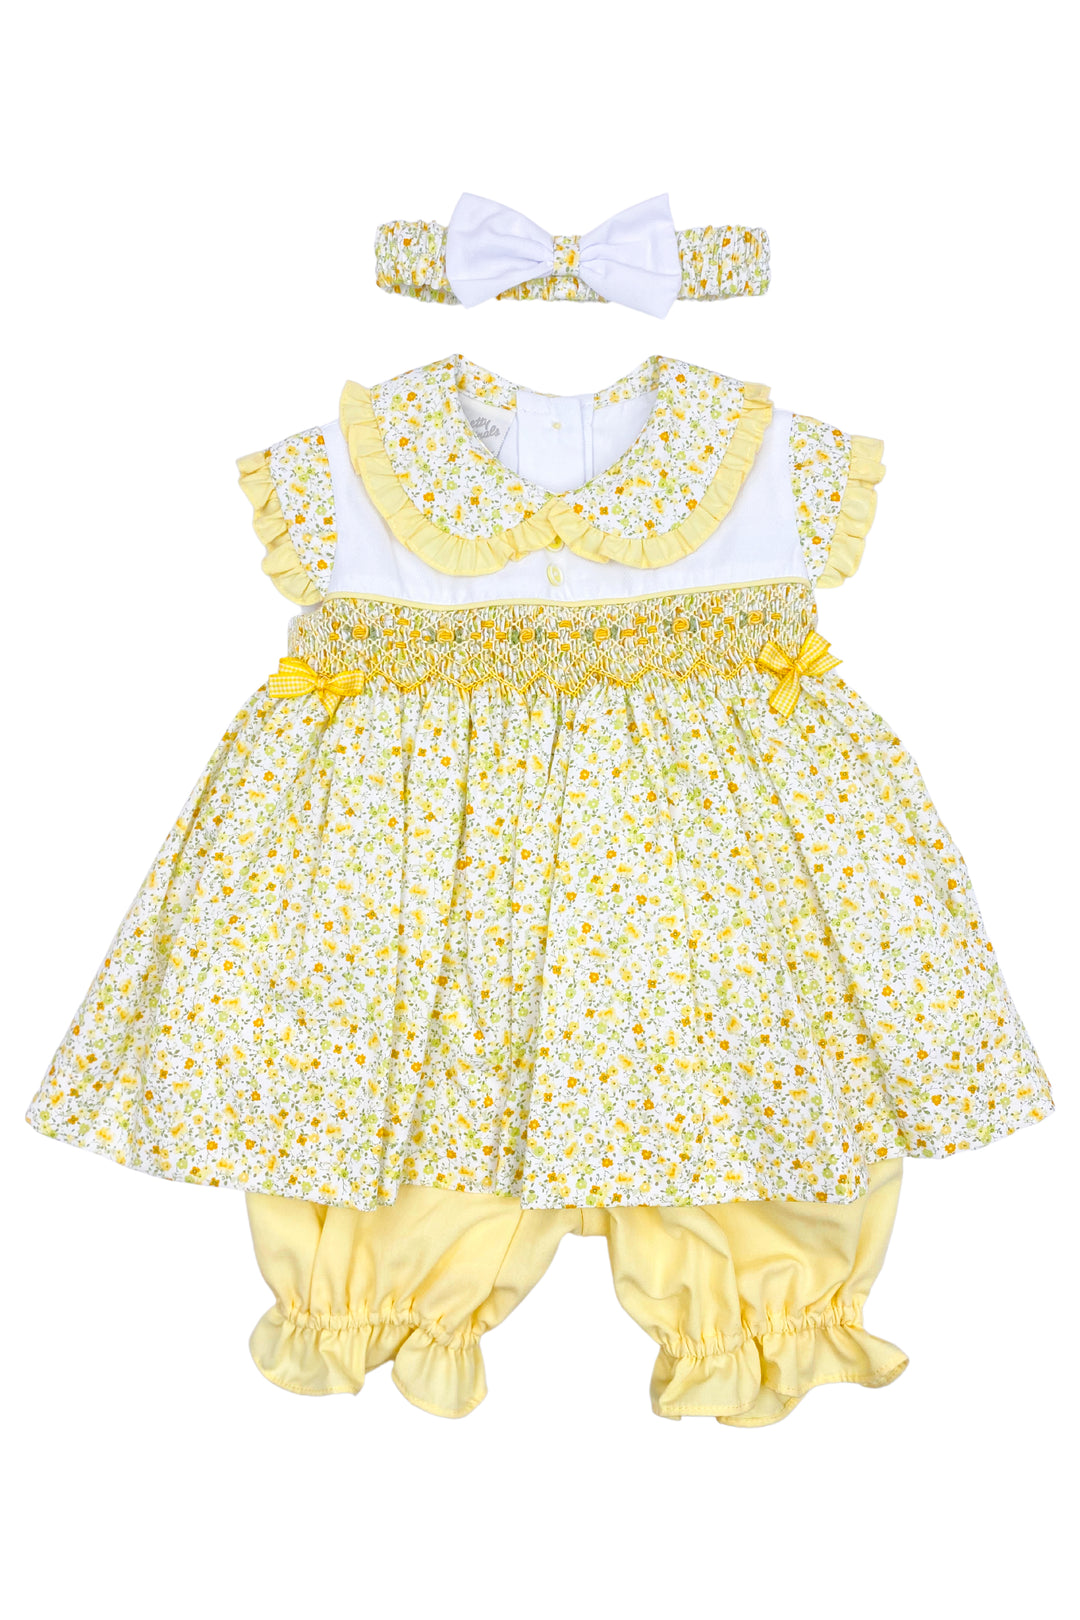 Pretty Originals "Farrah" Lemon Floral Dress, Bloomers & Headband | Millie and John